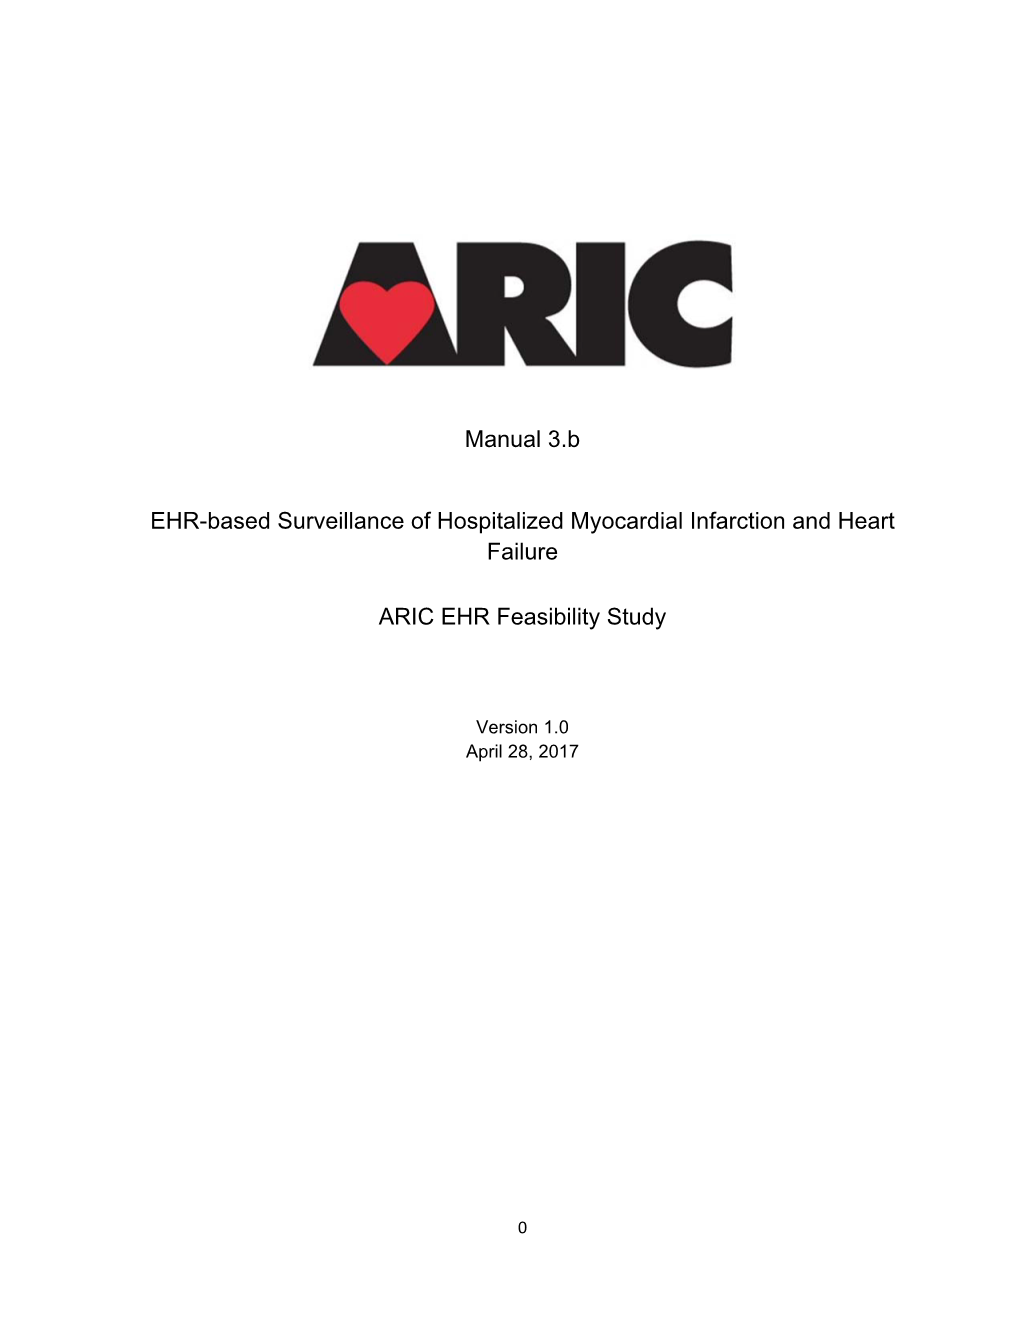 Manual 3.B EHR-Based Surveillance of Hospitalized Myocardial Infarction and Heart Failure ARIC EHR Feasibility Study